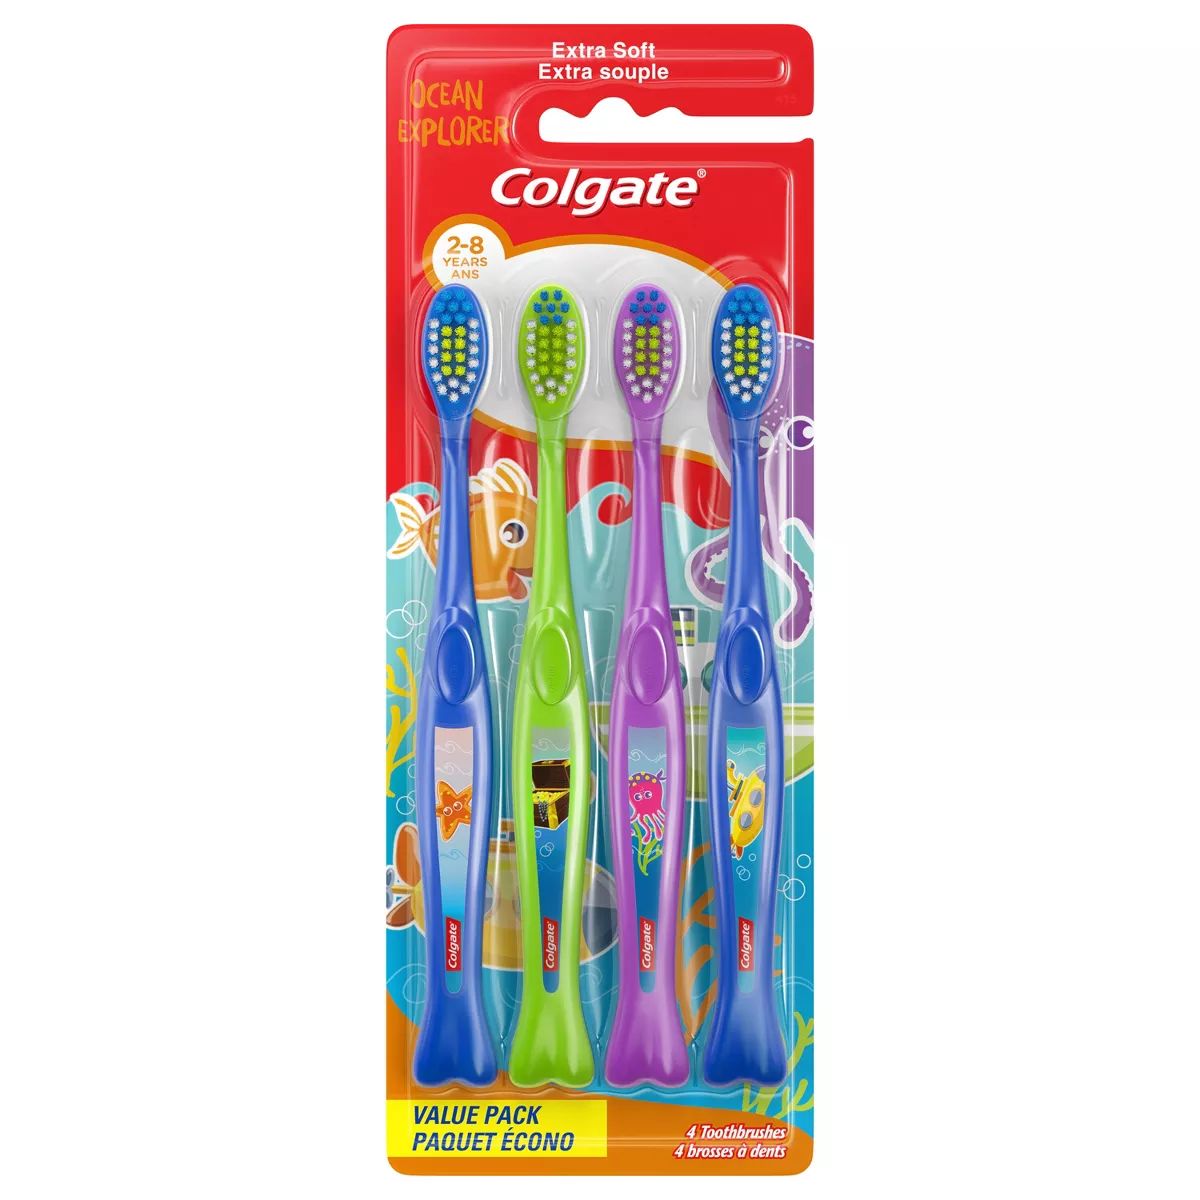 Colgate Kids Toothbrush Value Pack Ocean Explorer Extra Soft - 4ct | Target